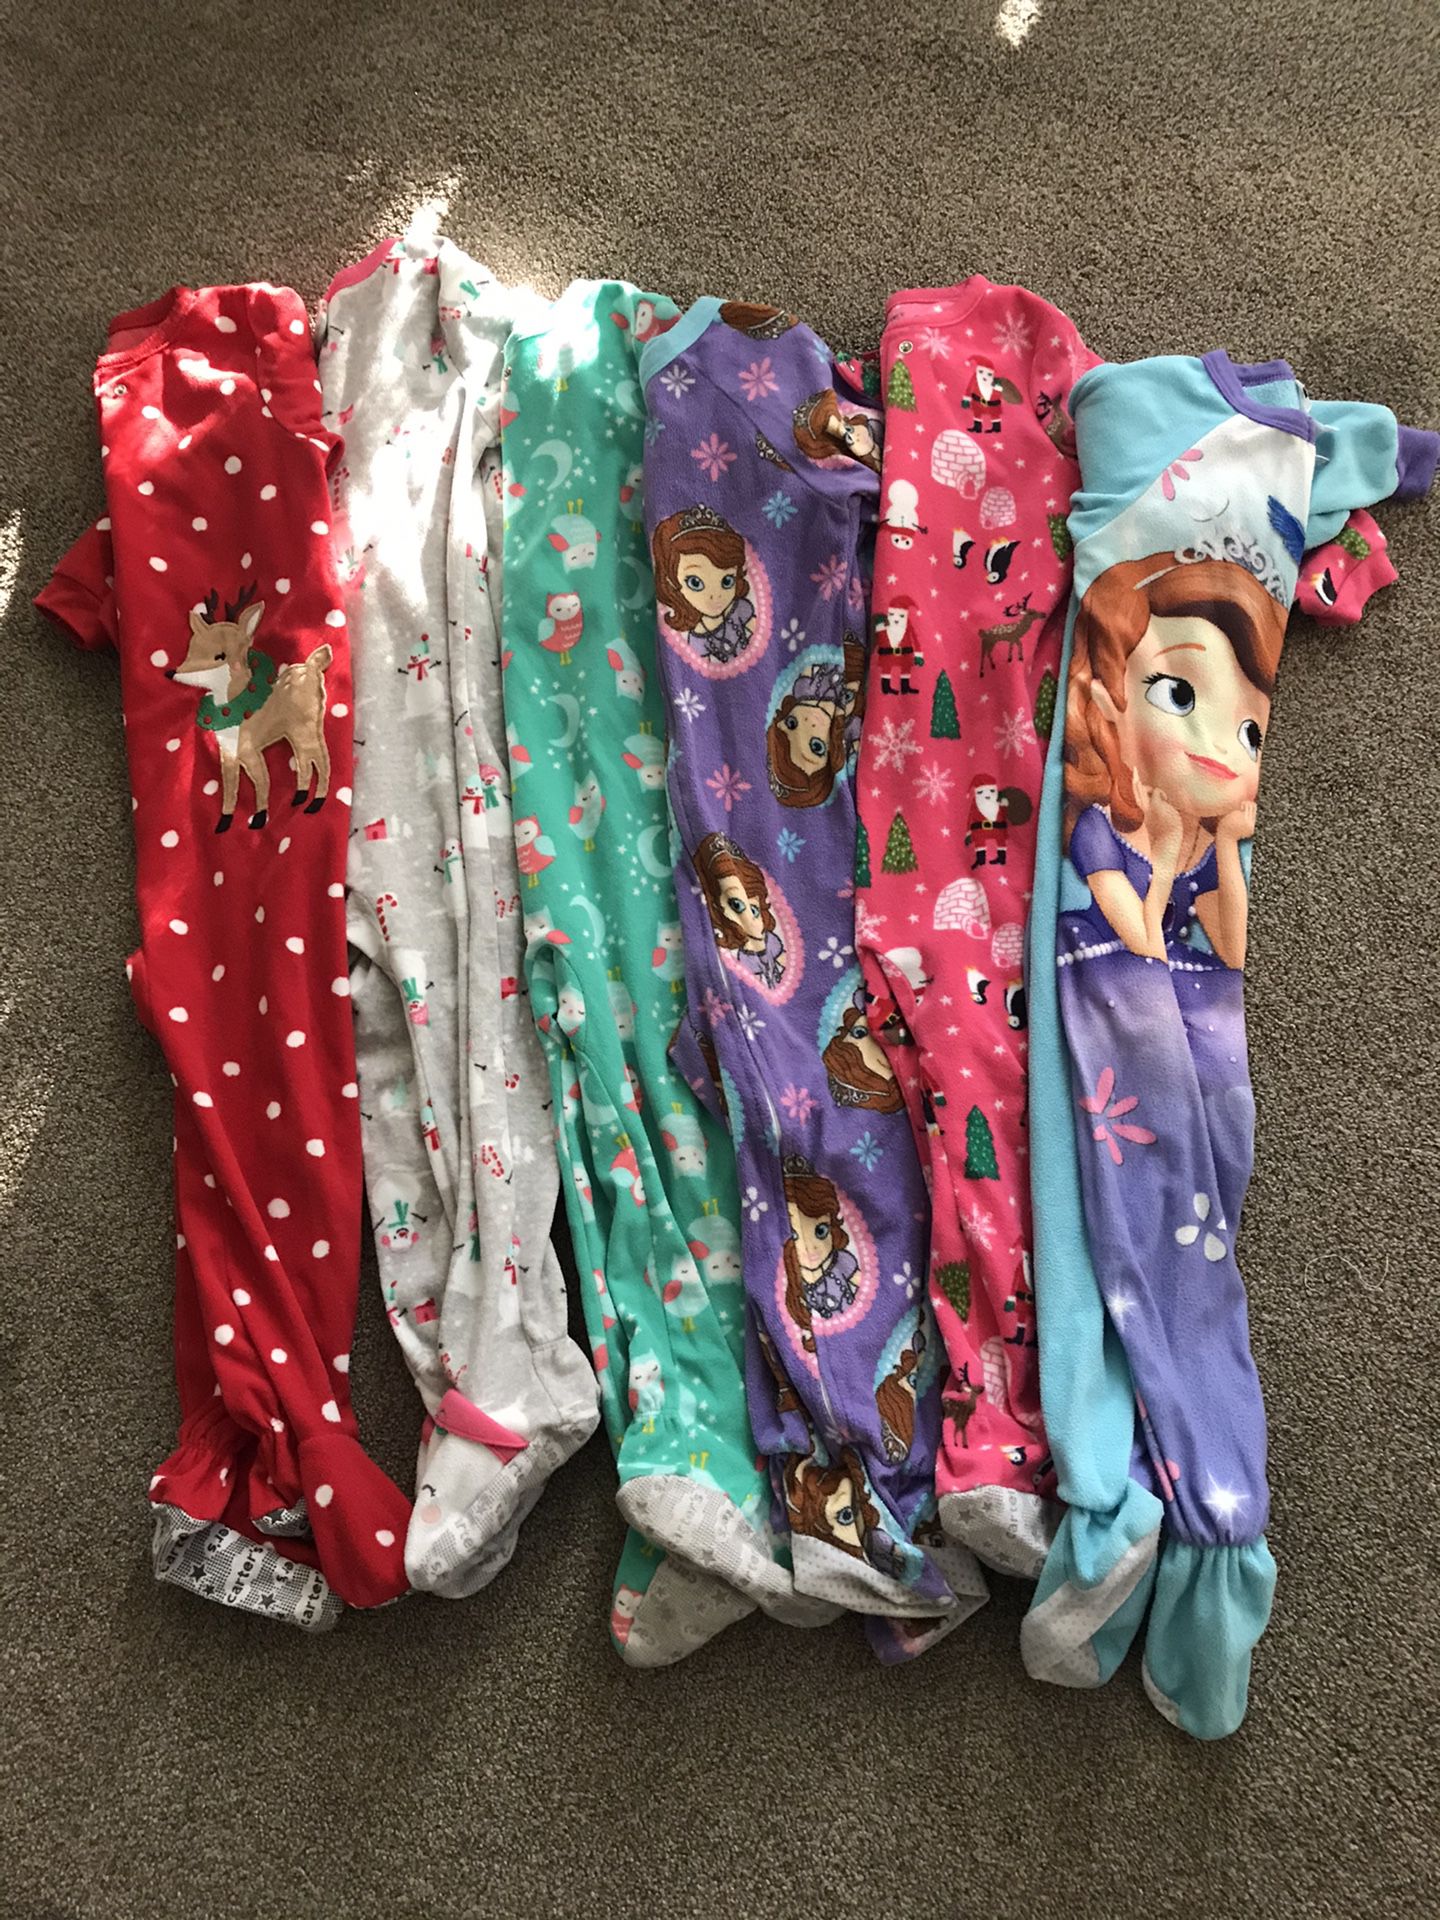 Toddler pajamas